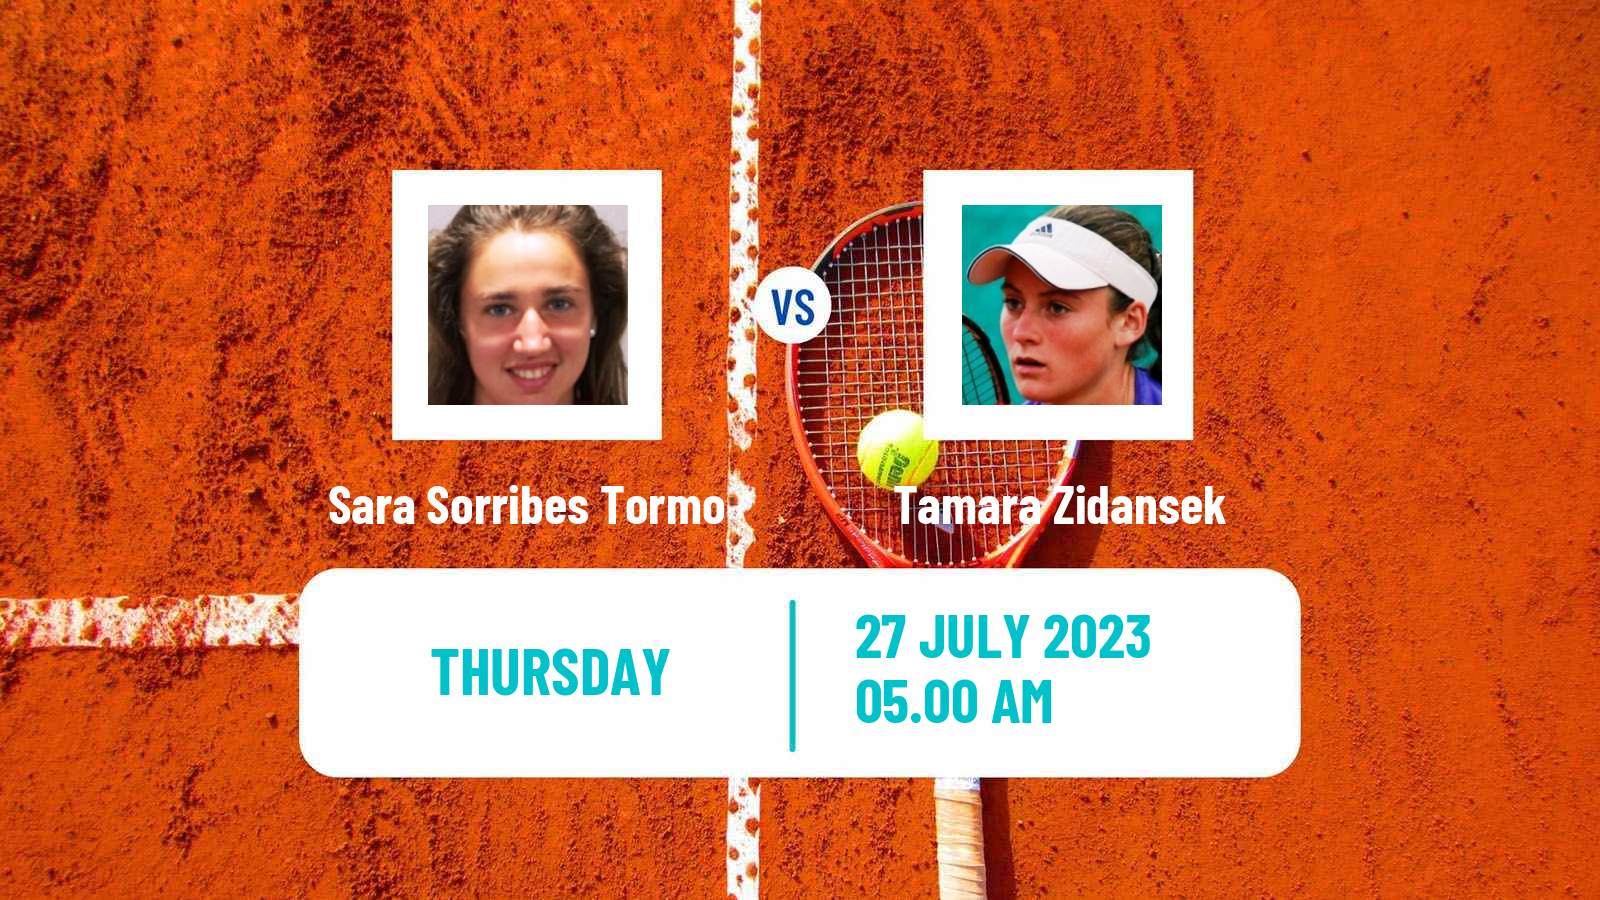 Tennis WTA Lausanne Sara Sorribes Tormo - Tamara Zidansek